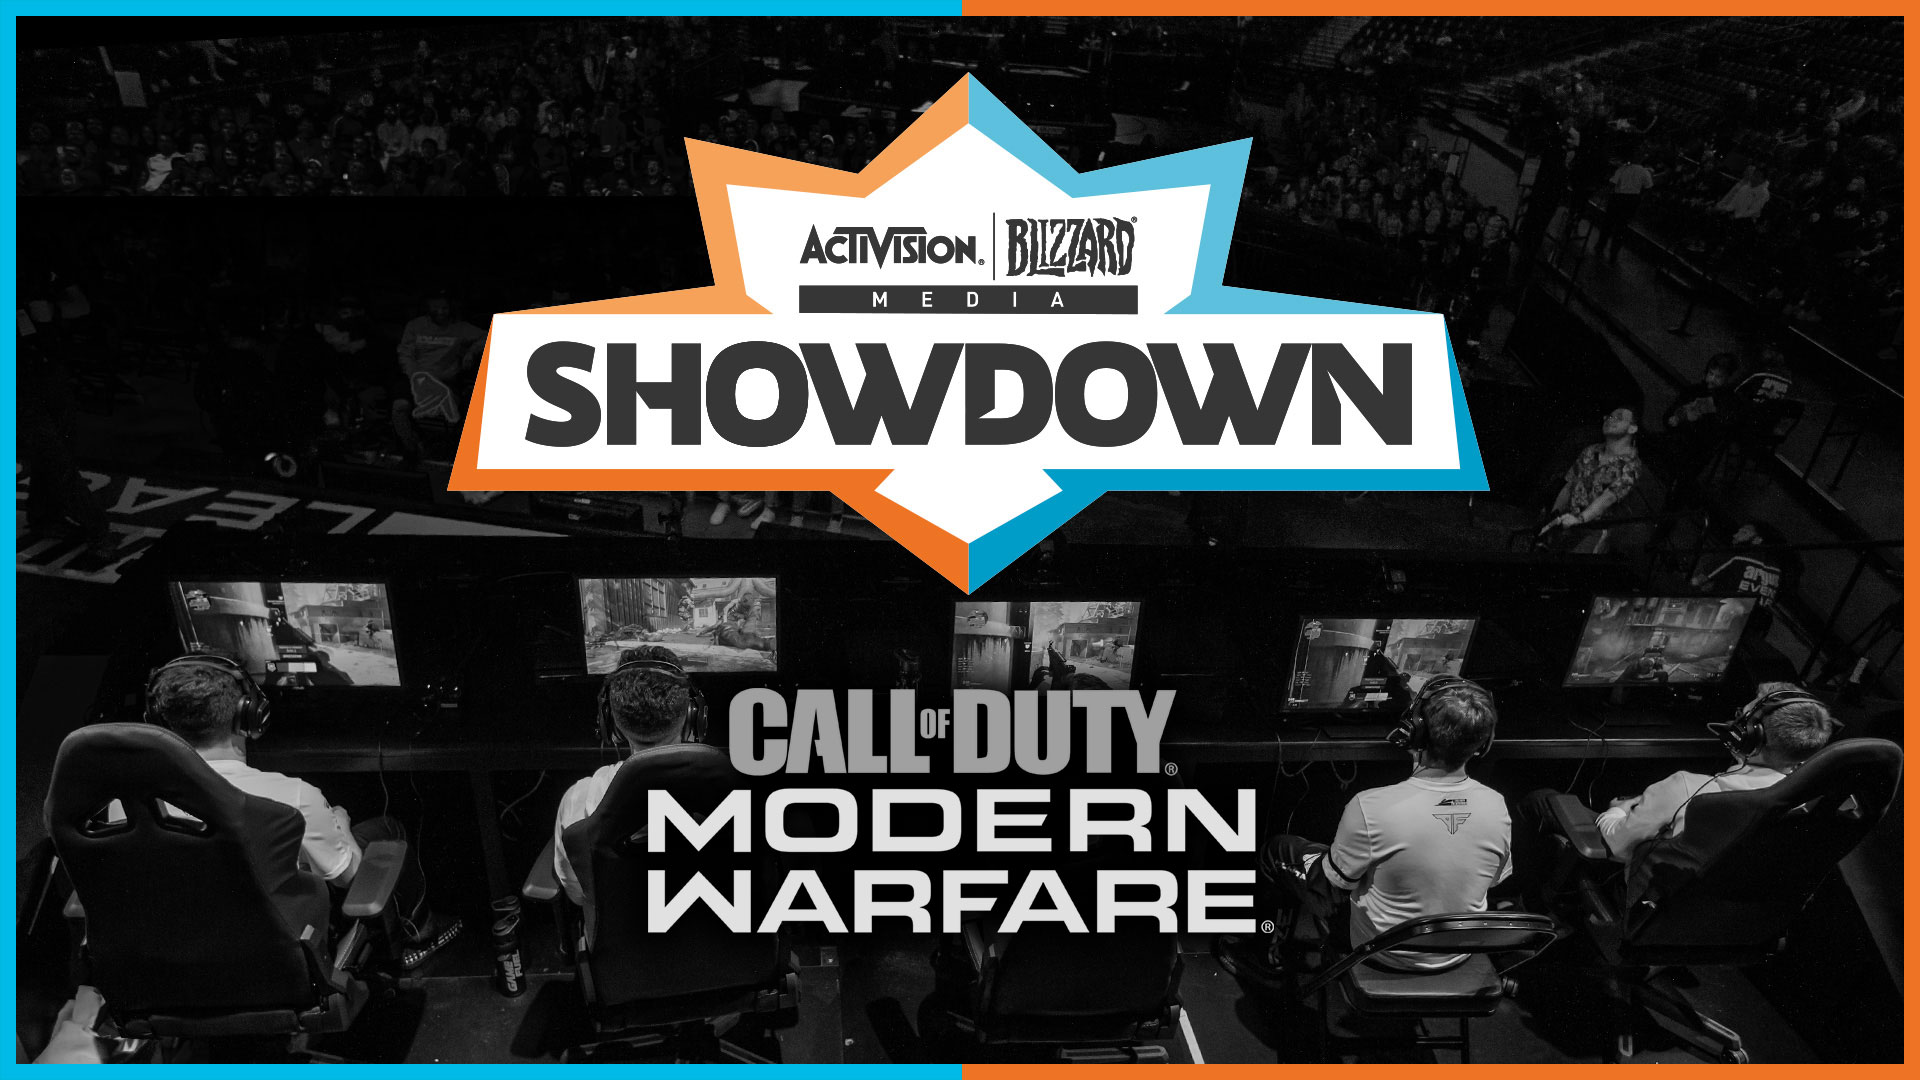 Activision Blizzard Media Showdown Call of Duty esports event